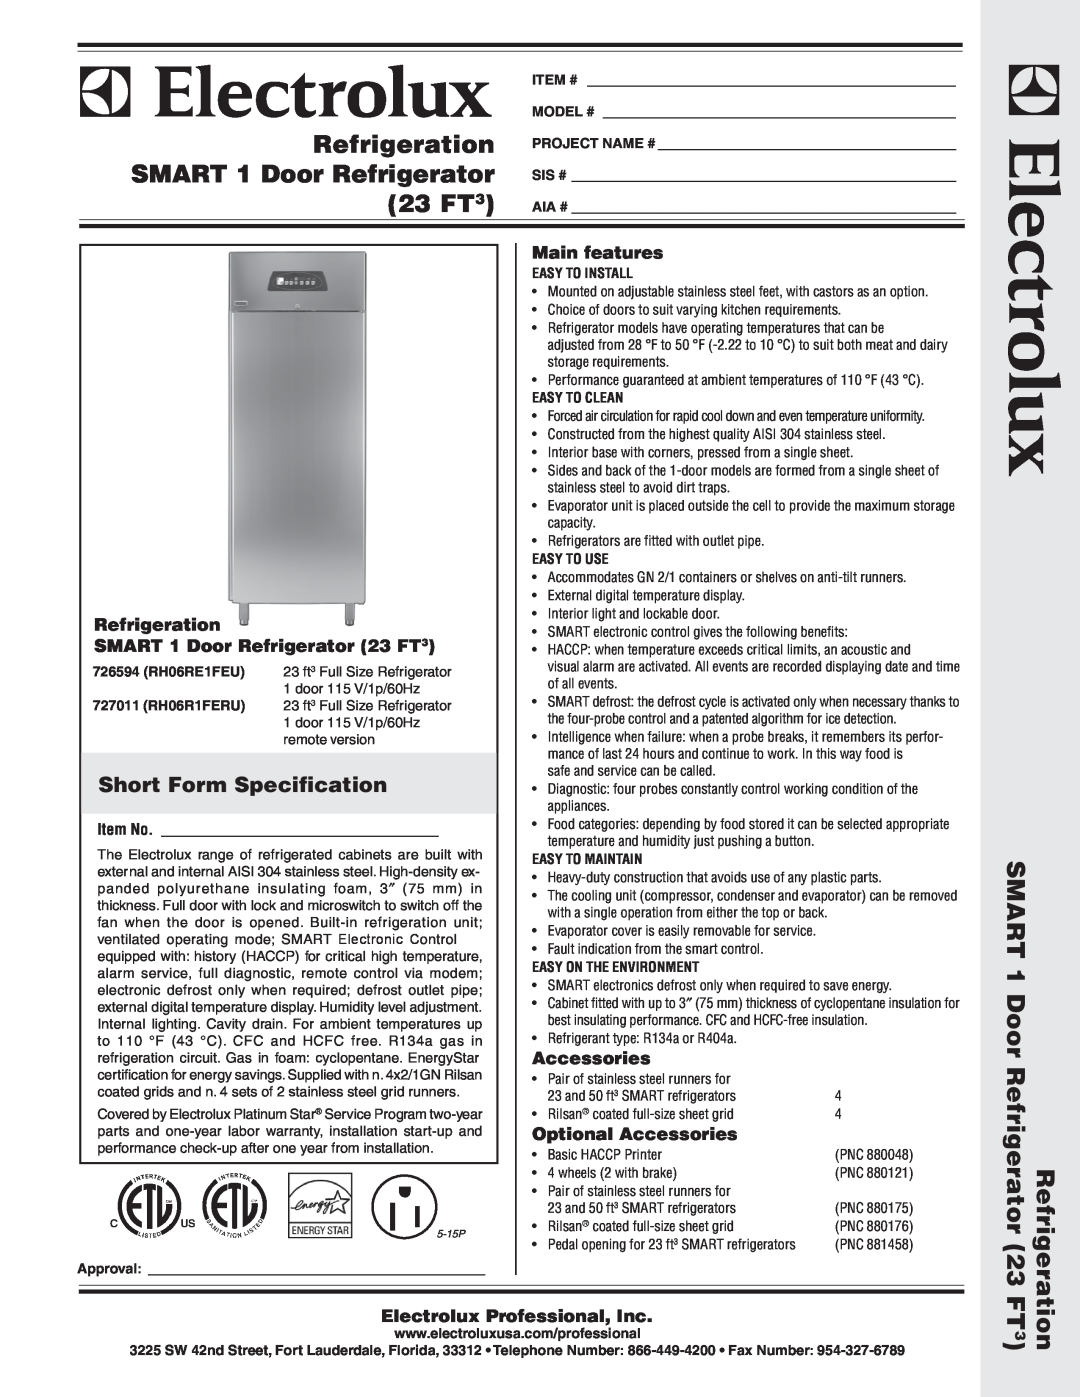 Electrolux 727011 warranty Short Form Specification, Main features, Refrigeration, SMART 1 Door Refrigerator 23 FT3 